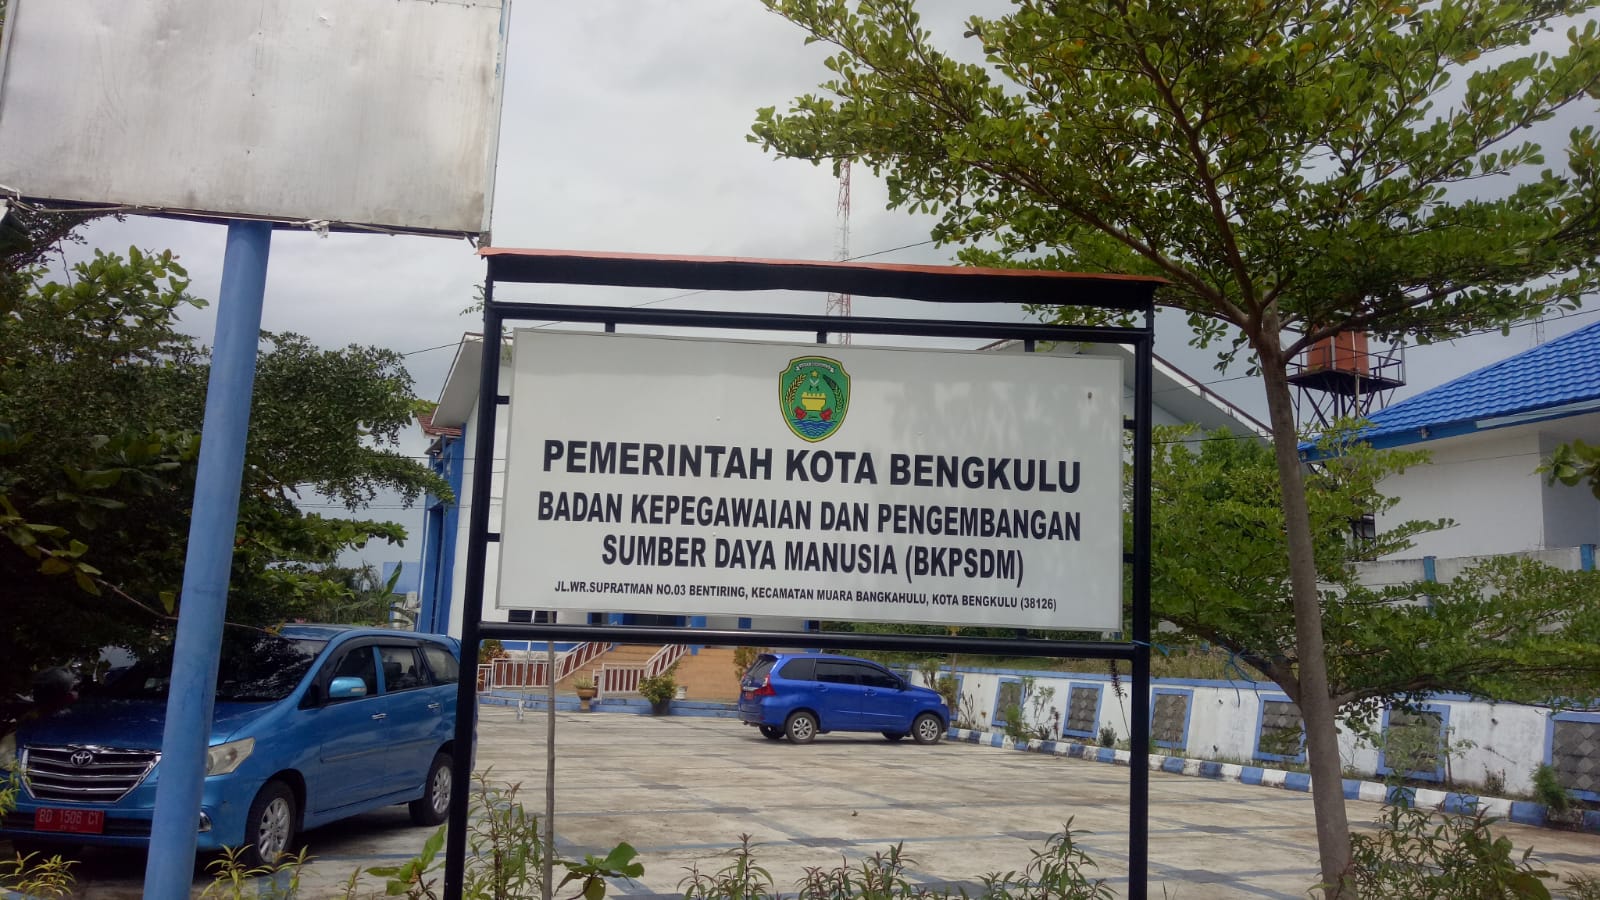 Inilah Riwayat Selingkar Tanah Bengkulu Tempo Dulu (26), Buat Jalan dari Bangkahulu ke Palembang 